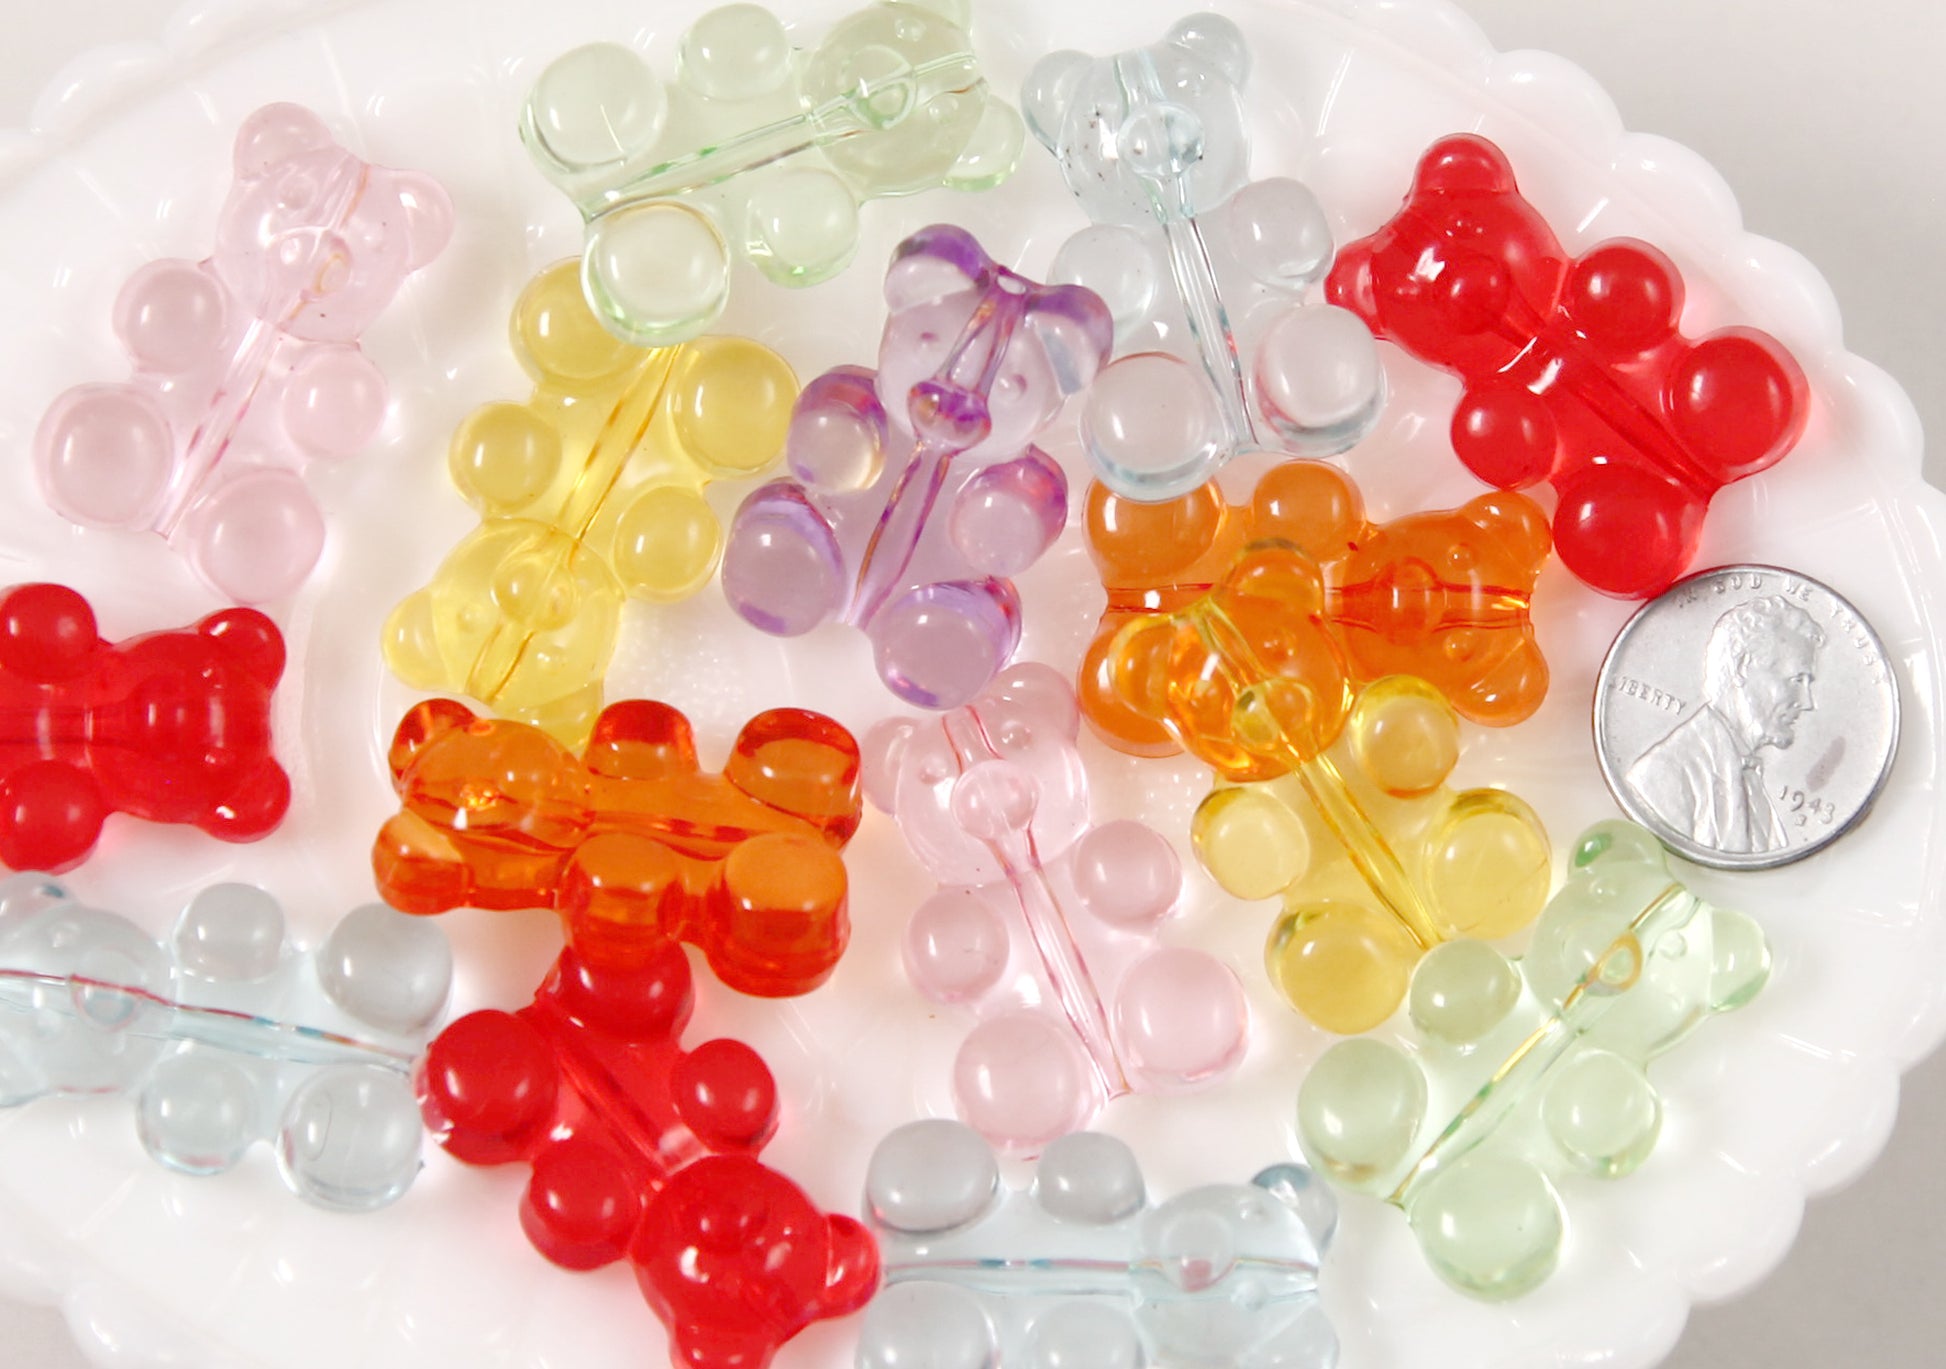 Ten Top to Bottom Drilled Glossy Gummy Bear Beads, 16x11x9mm Hard